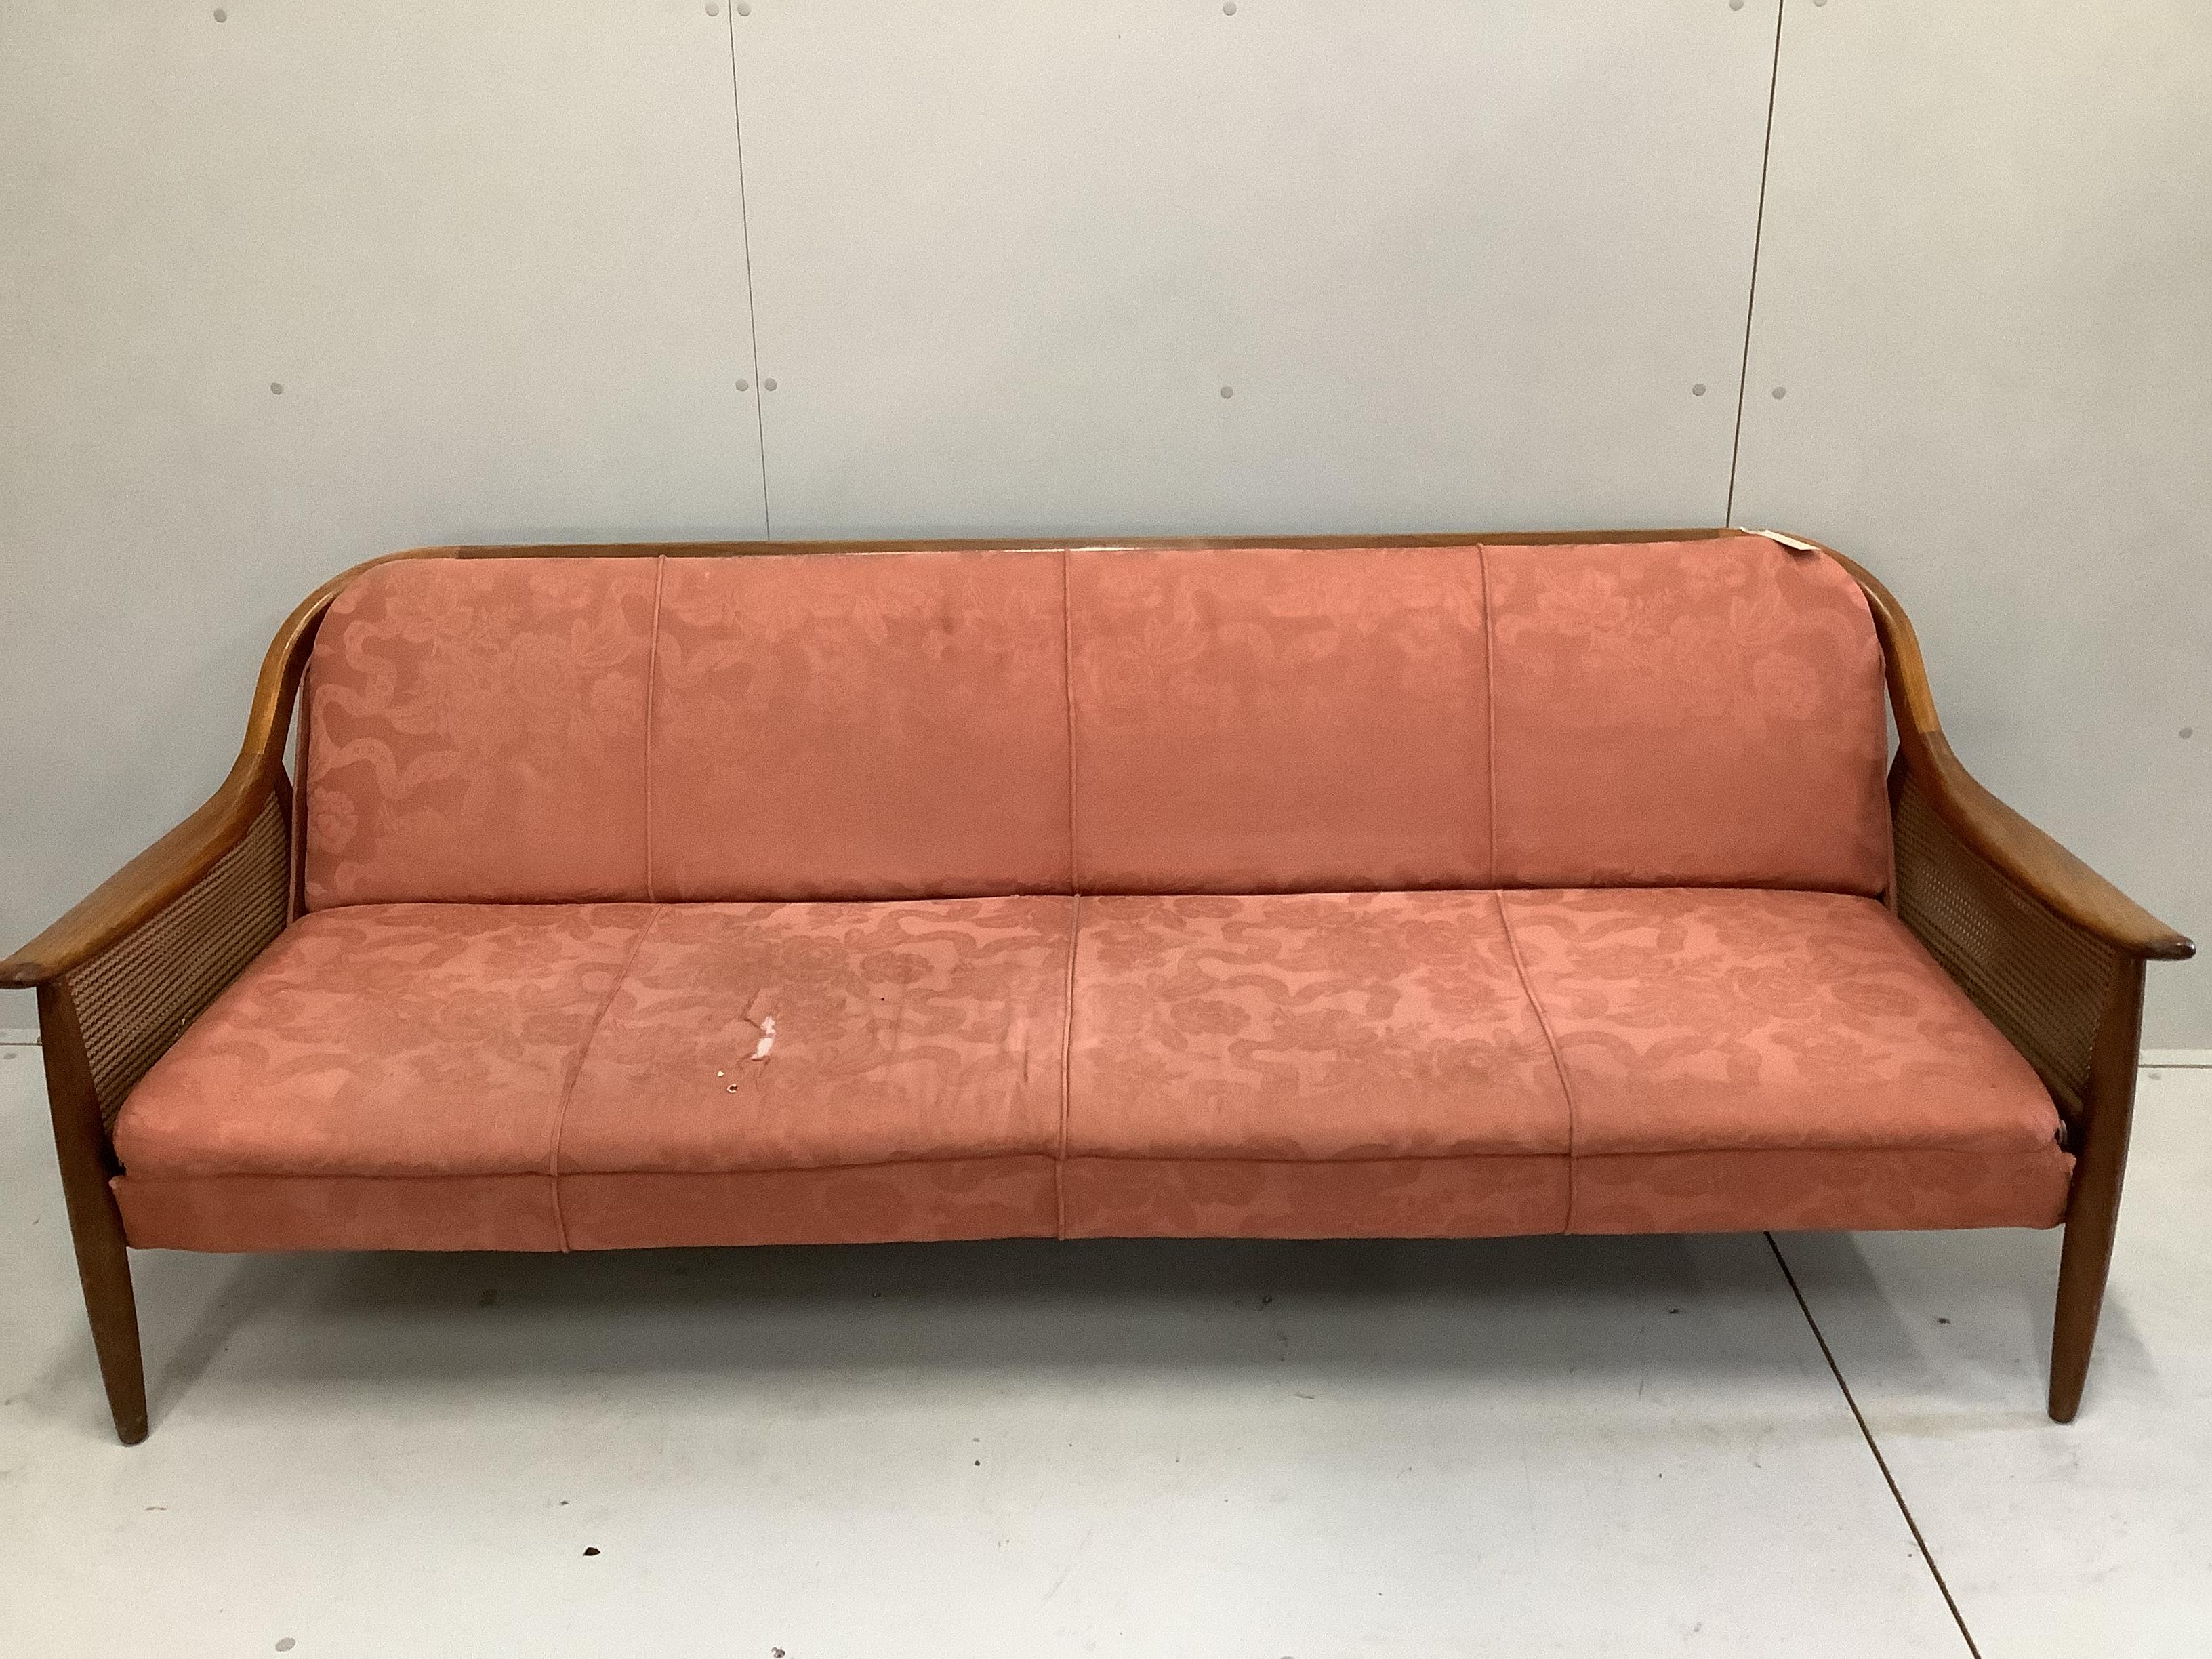 A mid century Danish design caned teak sofa bed, width 200cm, depth 75cm, height 75cm